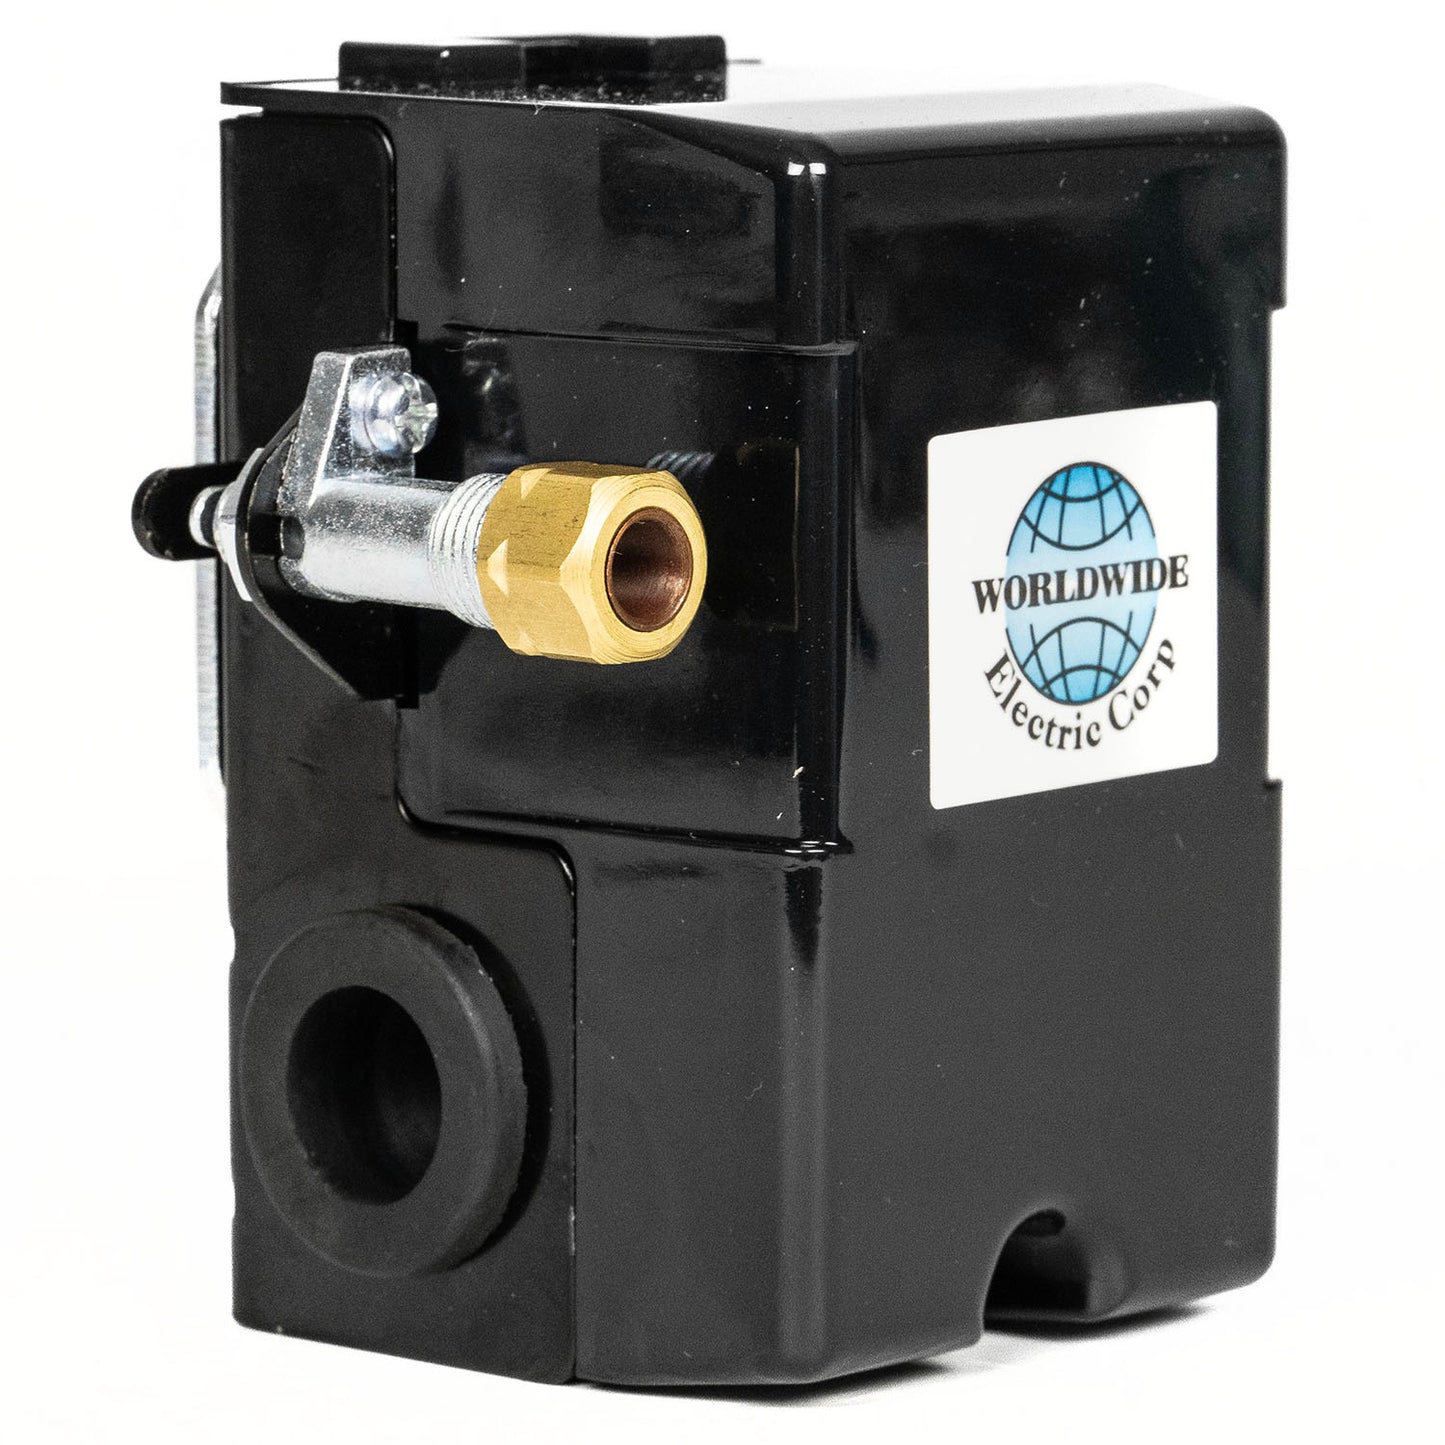 Heavy Duty 26 Amp Air Compressor Pressure Switch Control 115-150 PSI Single Port